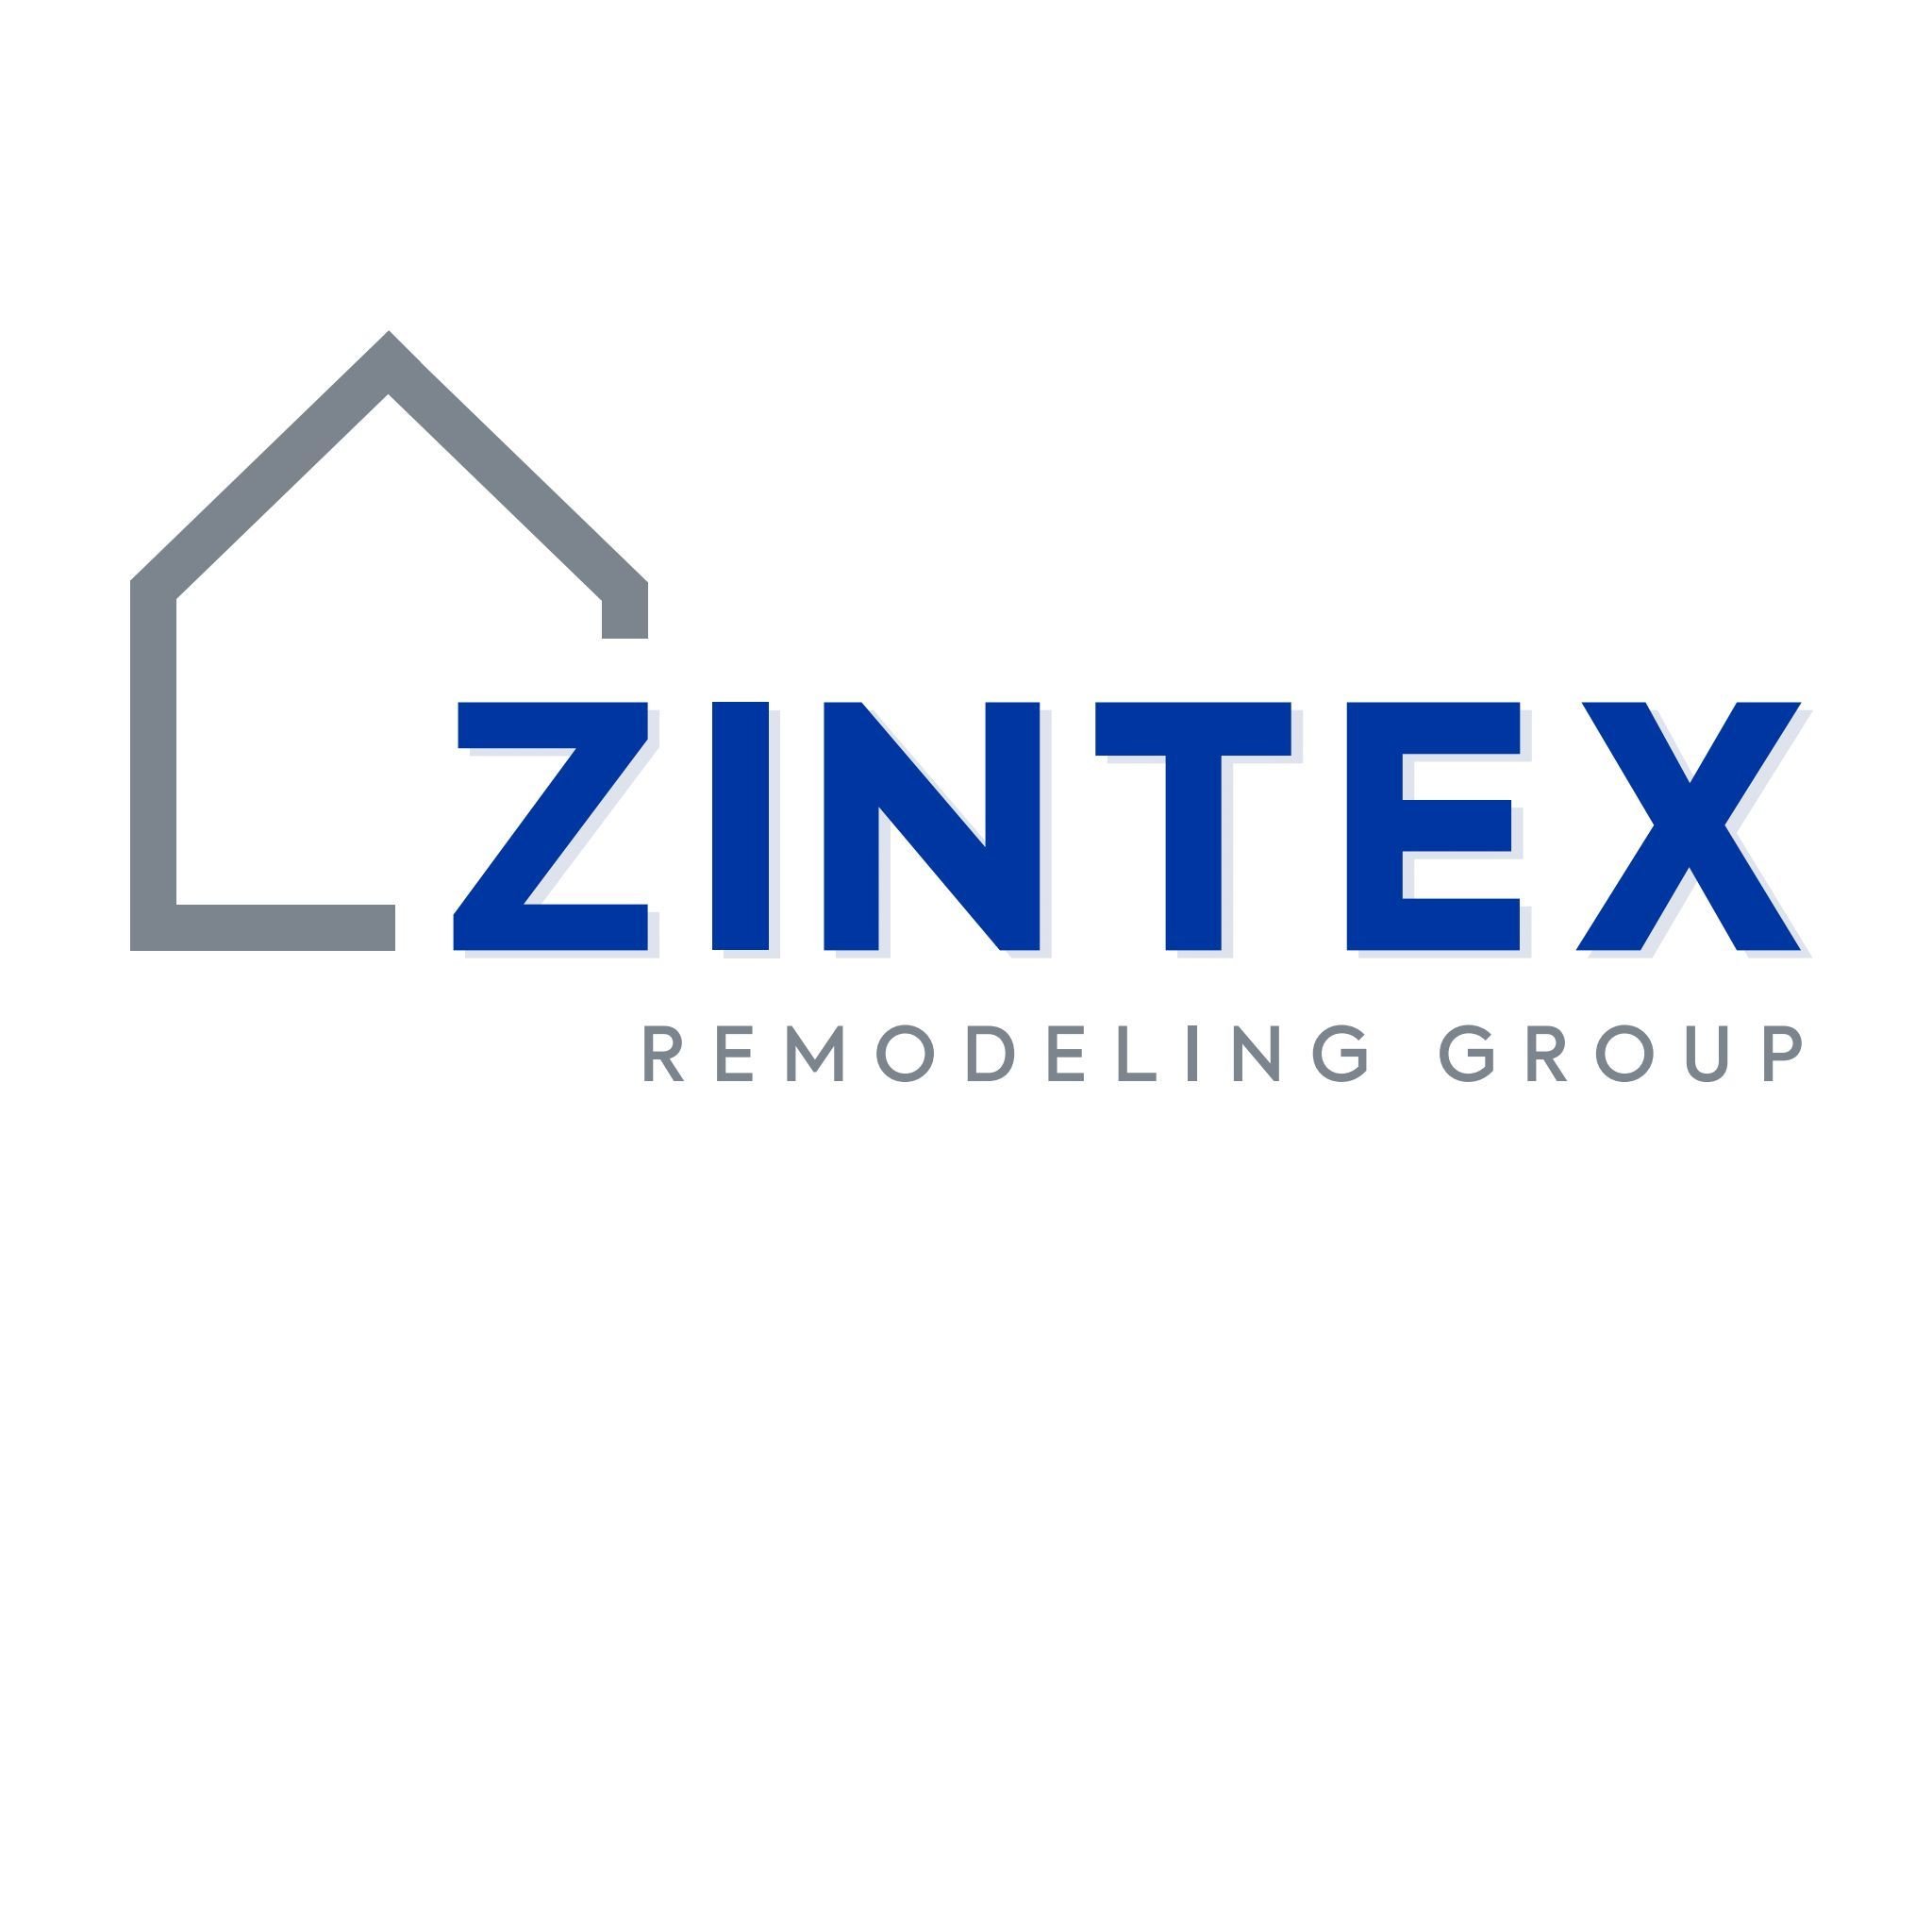 Zintex Remodeling Group - East Texas Logo